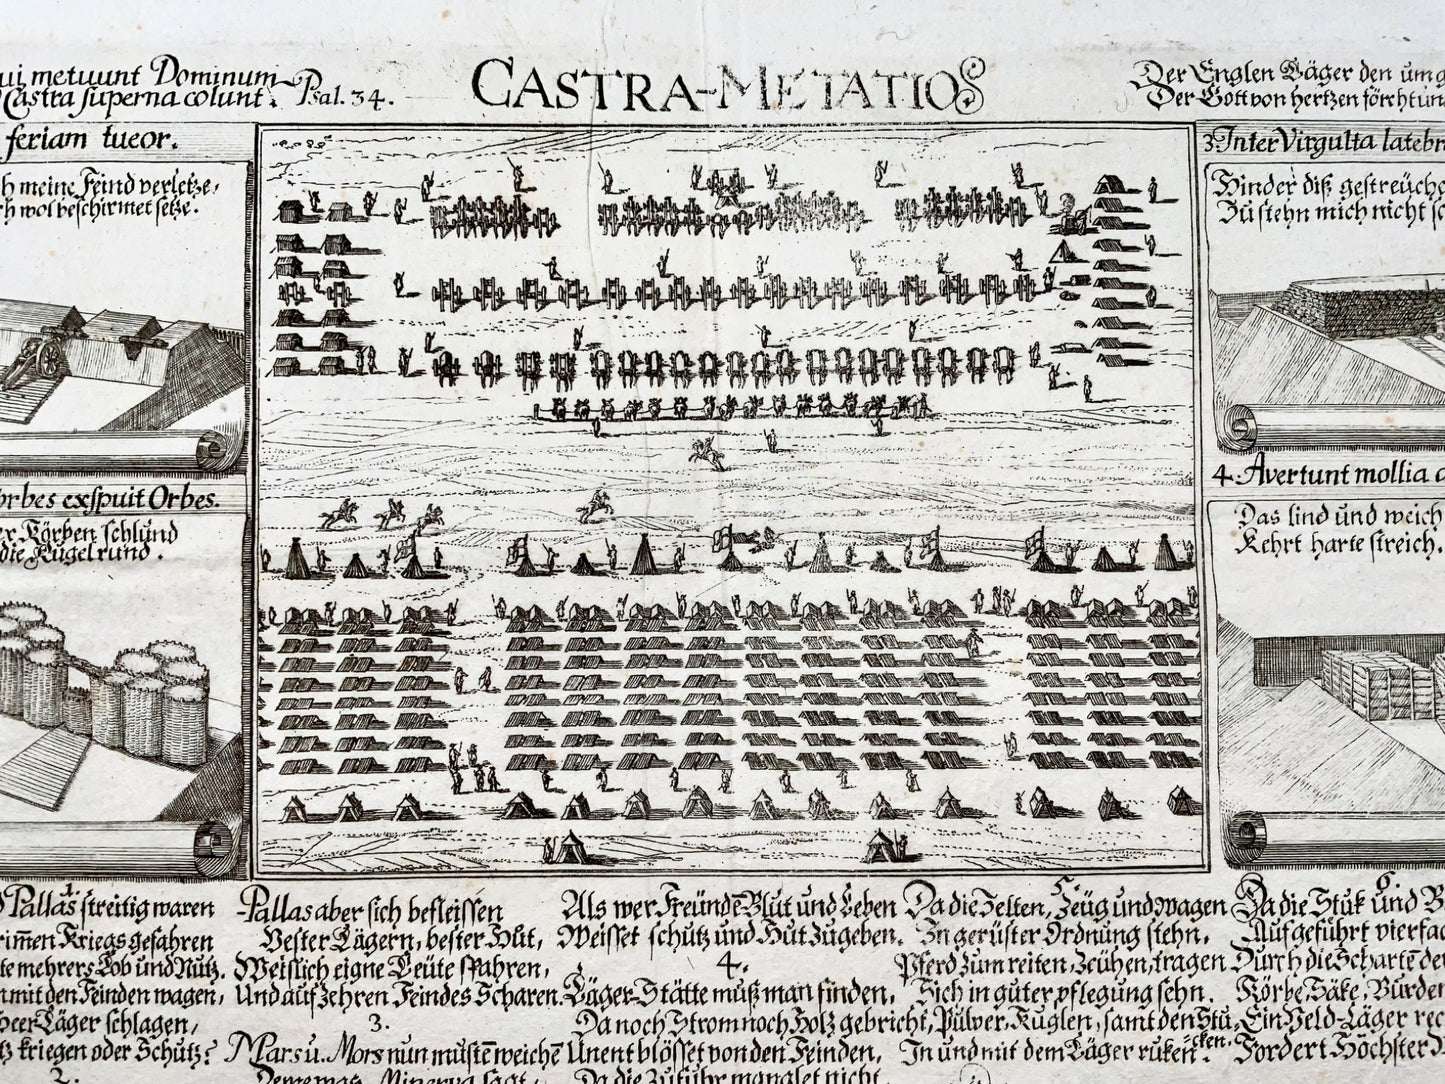 1697 Broadside, ‘Castra-Metatio’, military camp formation, Switzerland